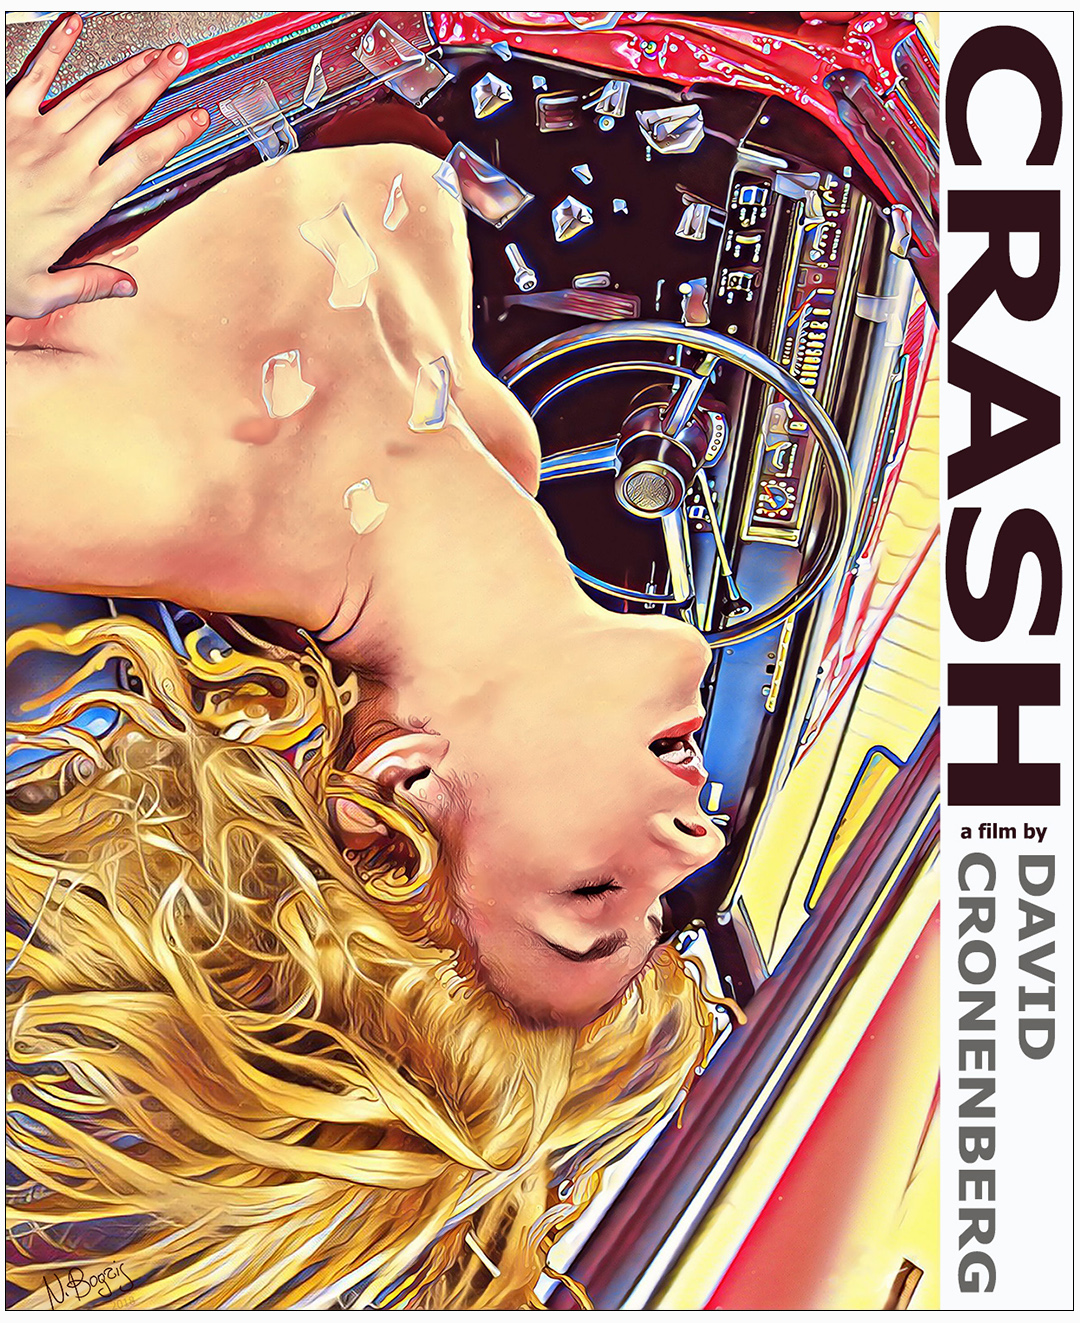 Crash (1996), Movie Poster